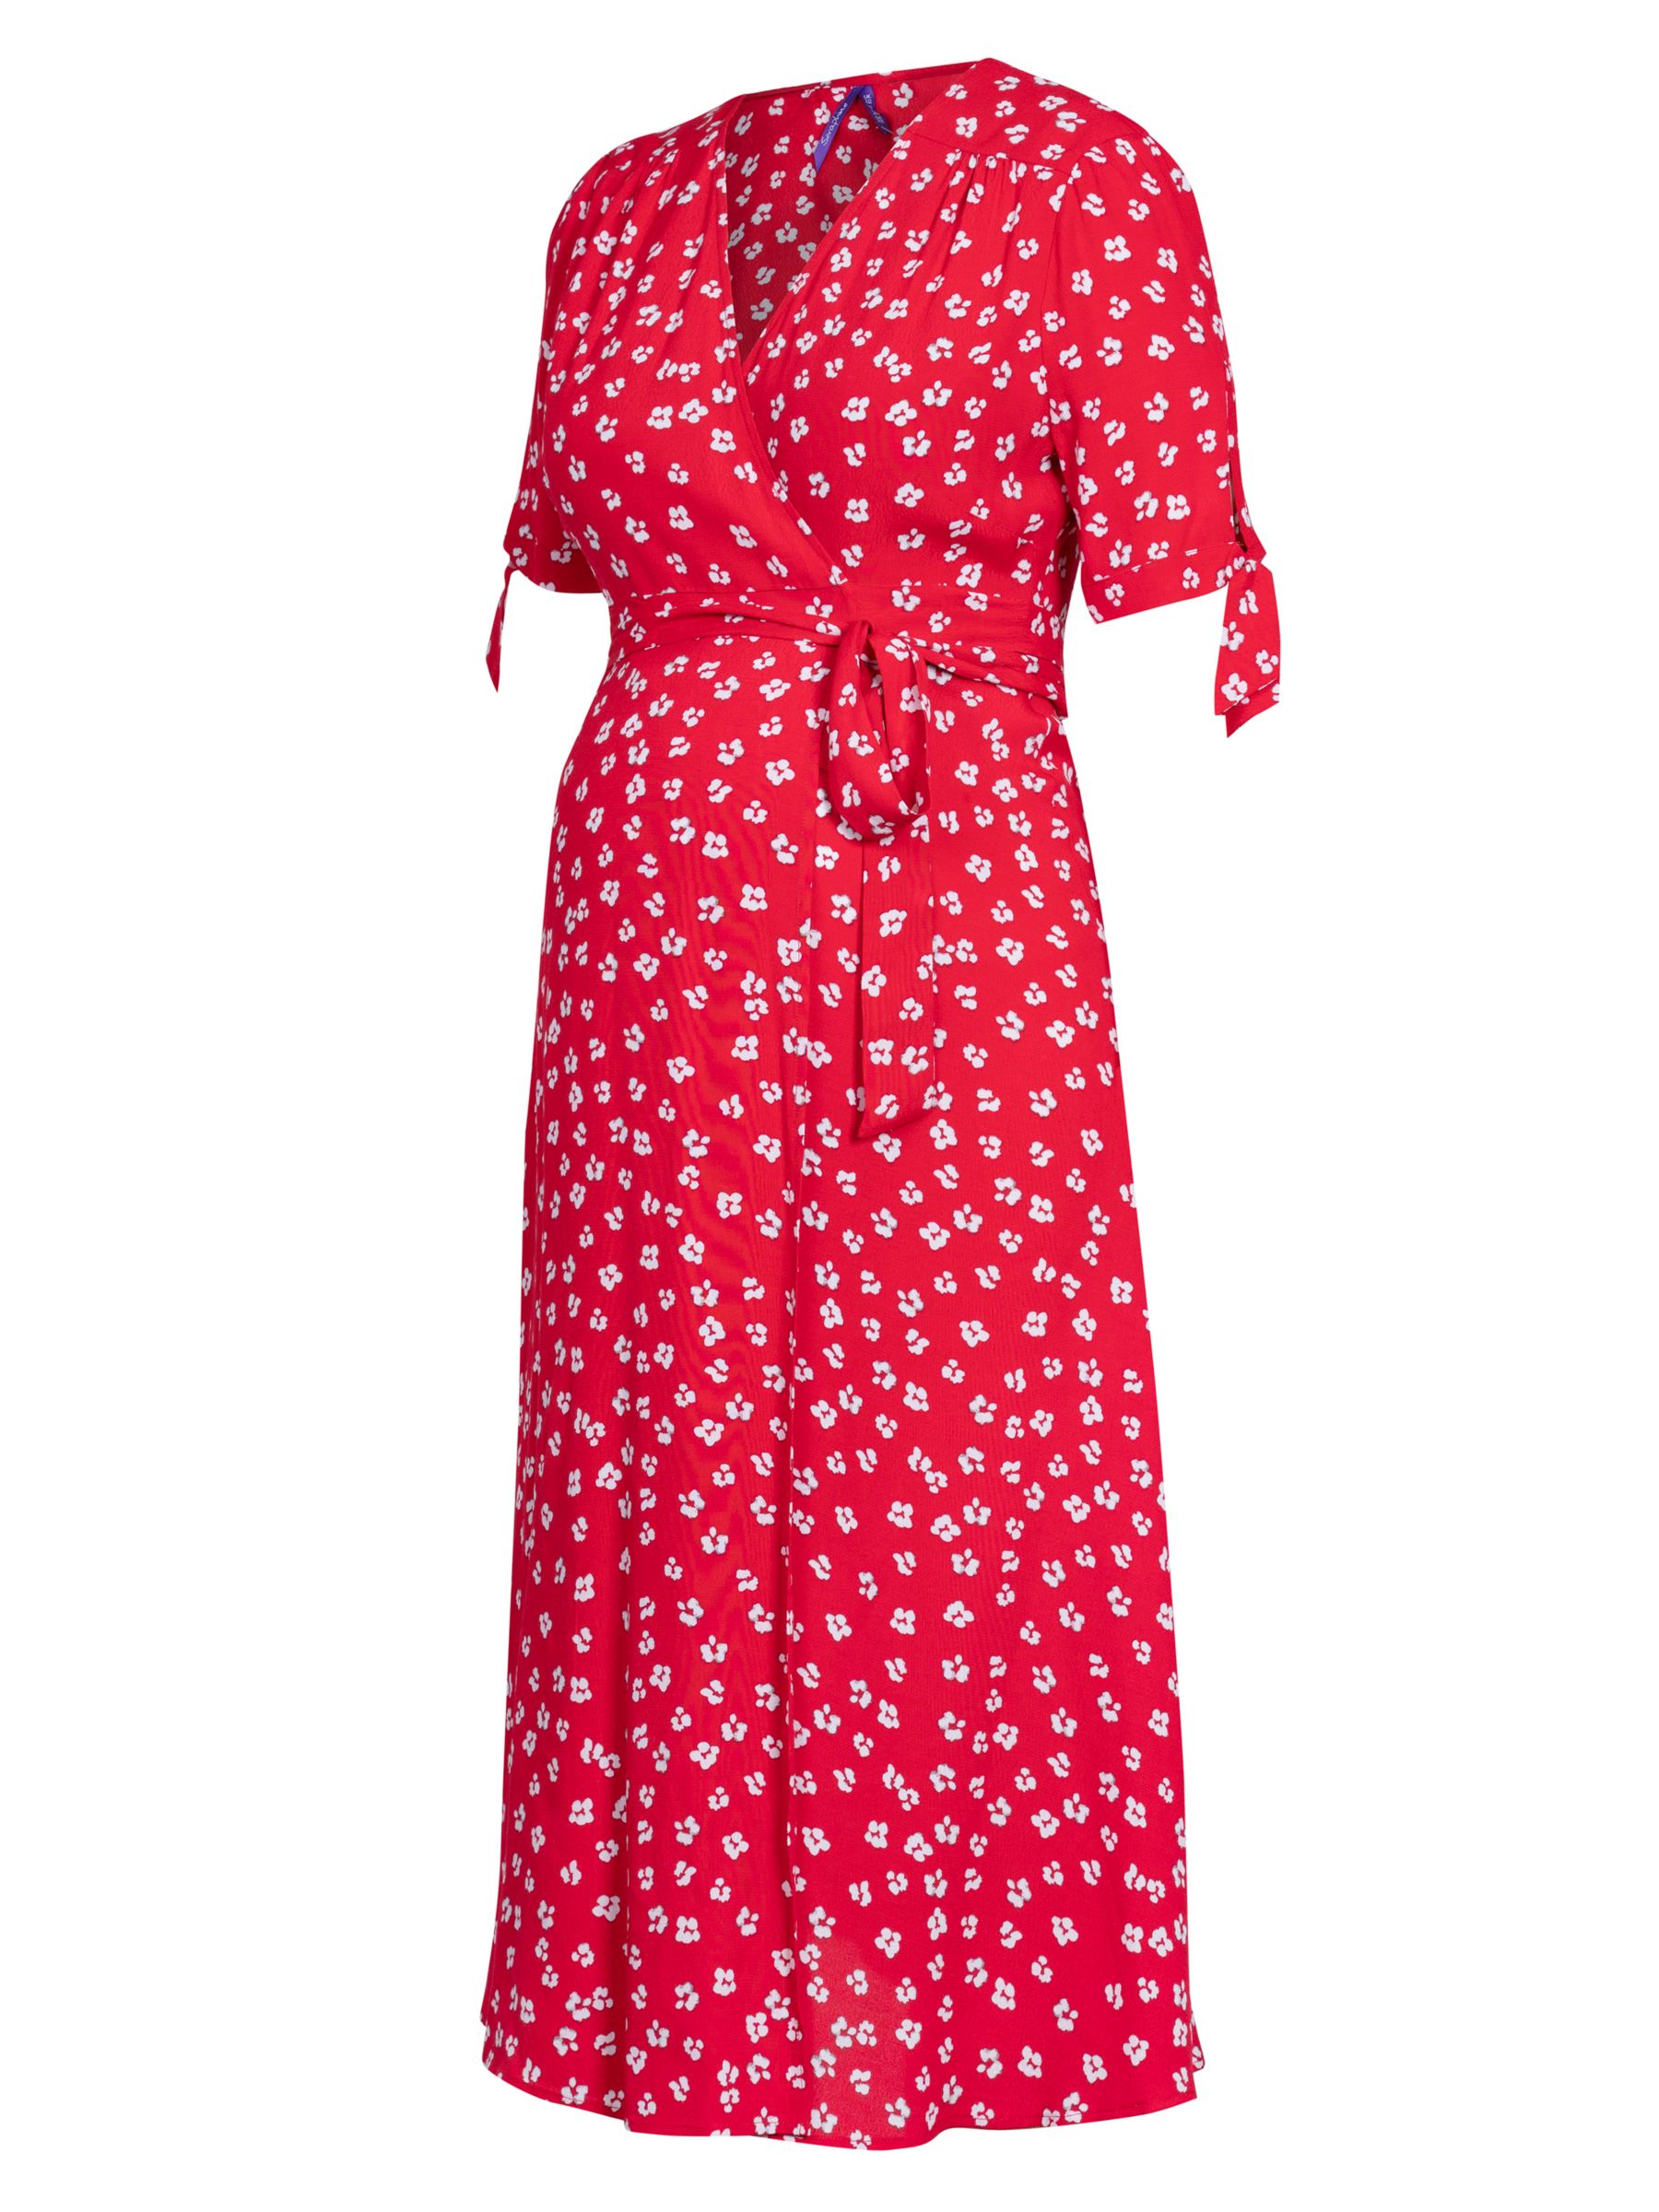 Seraphine Bessie Floral Maternity Dress, Red, 10